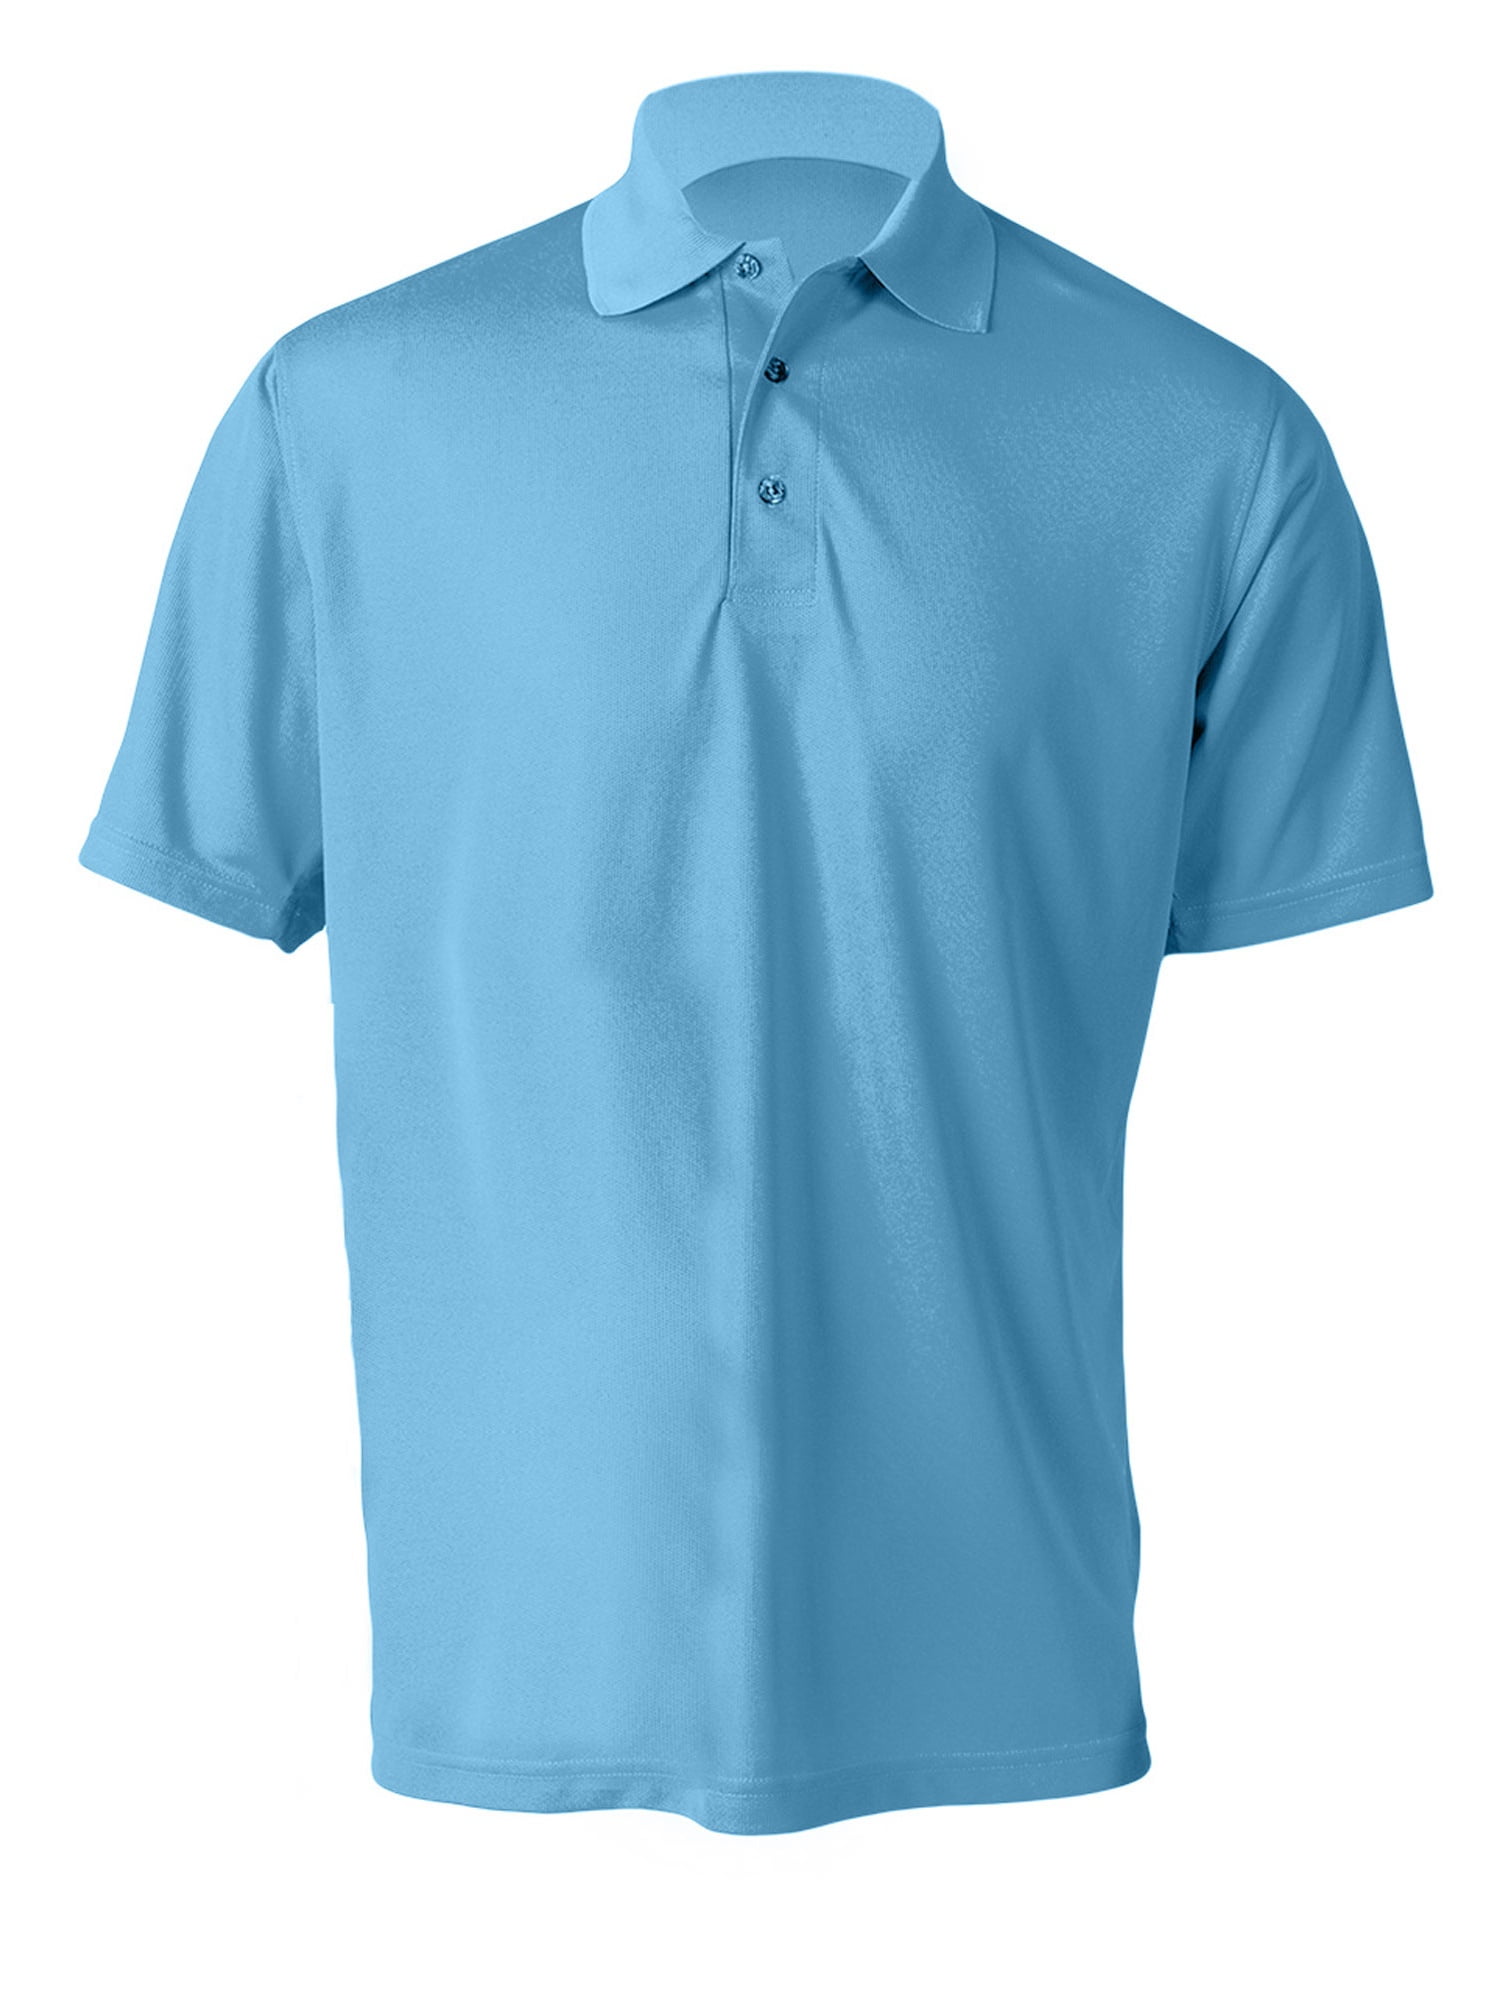 30 100 Upf Protection Style Shirt, Polo Microbial Anti Paragon Men\'s